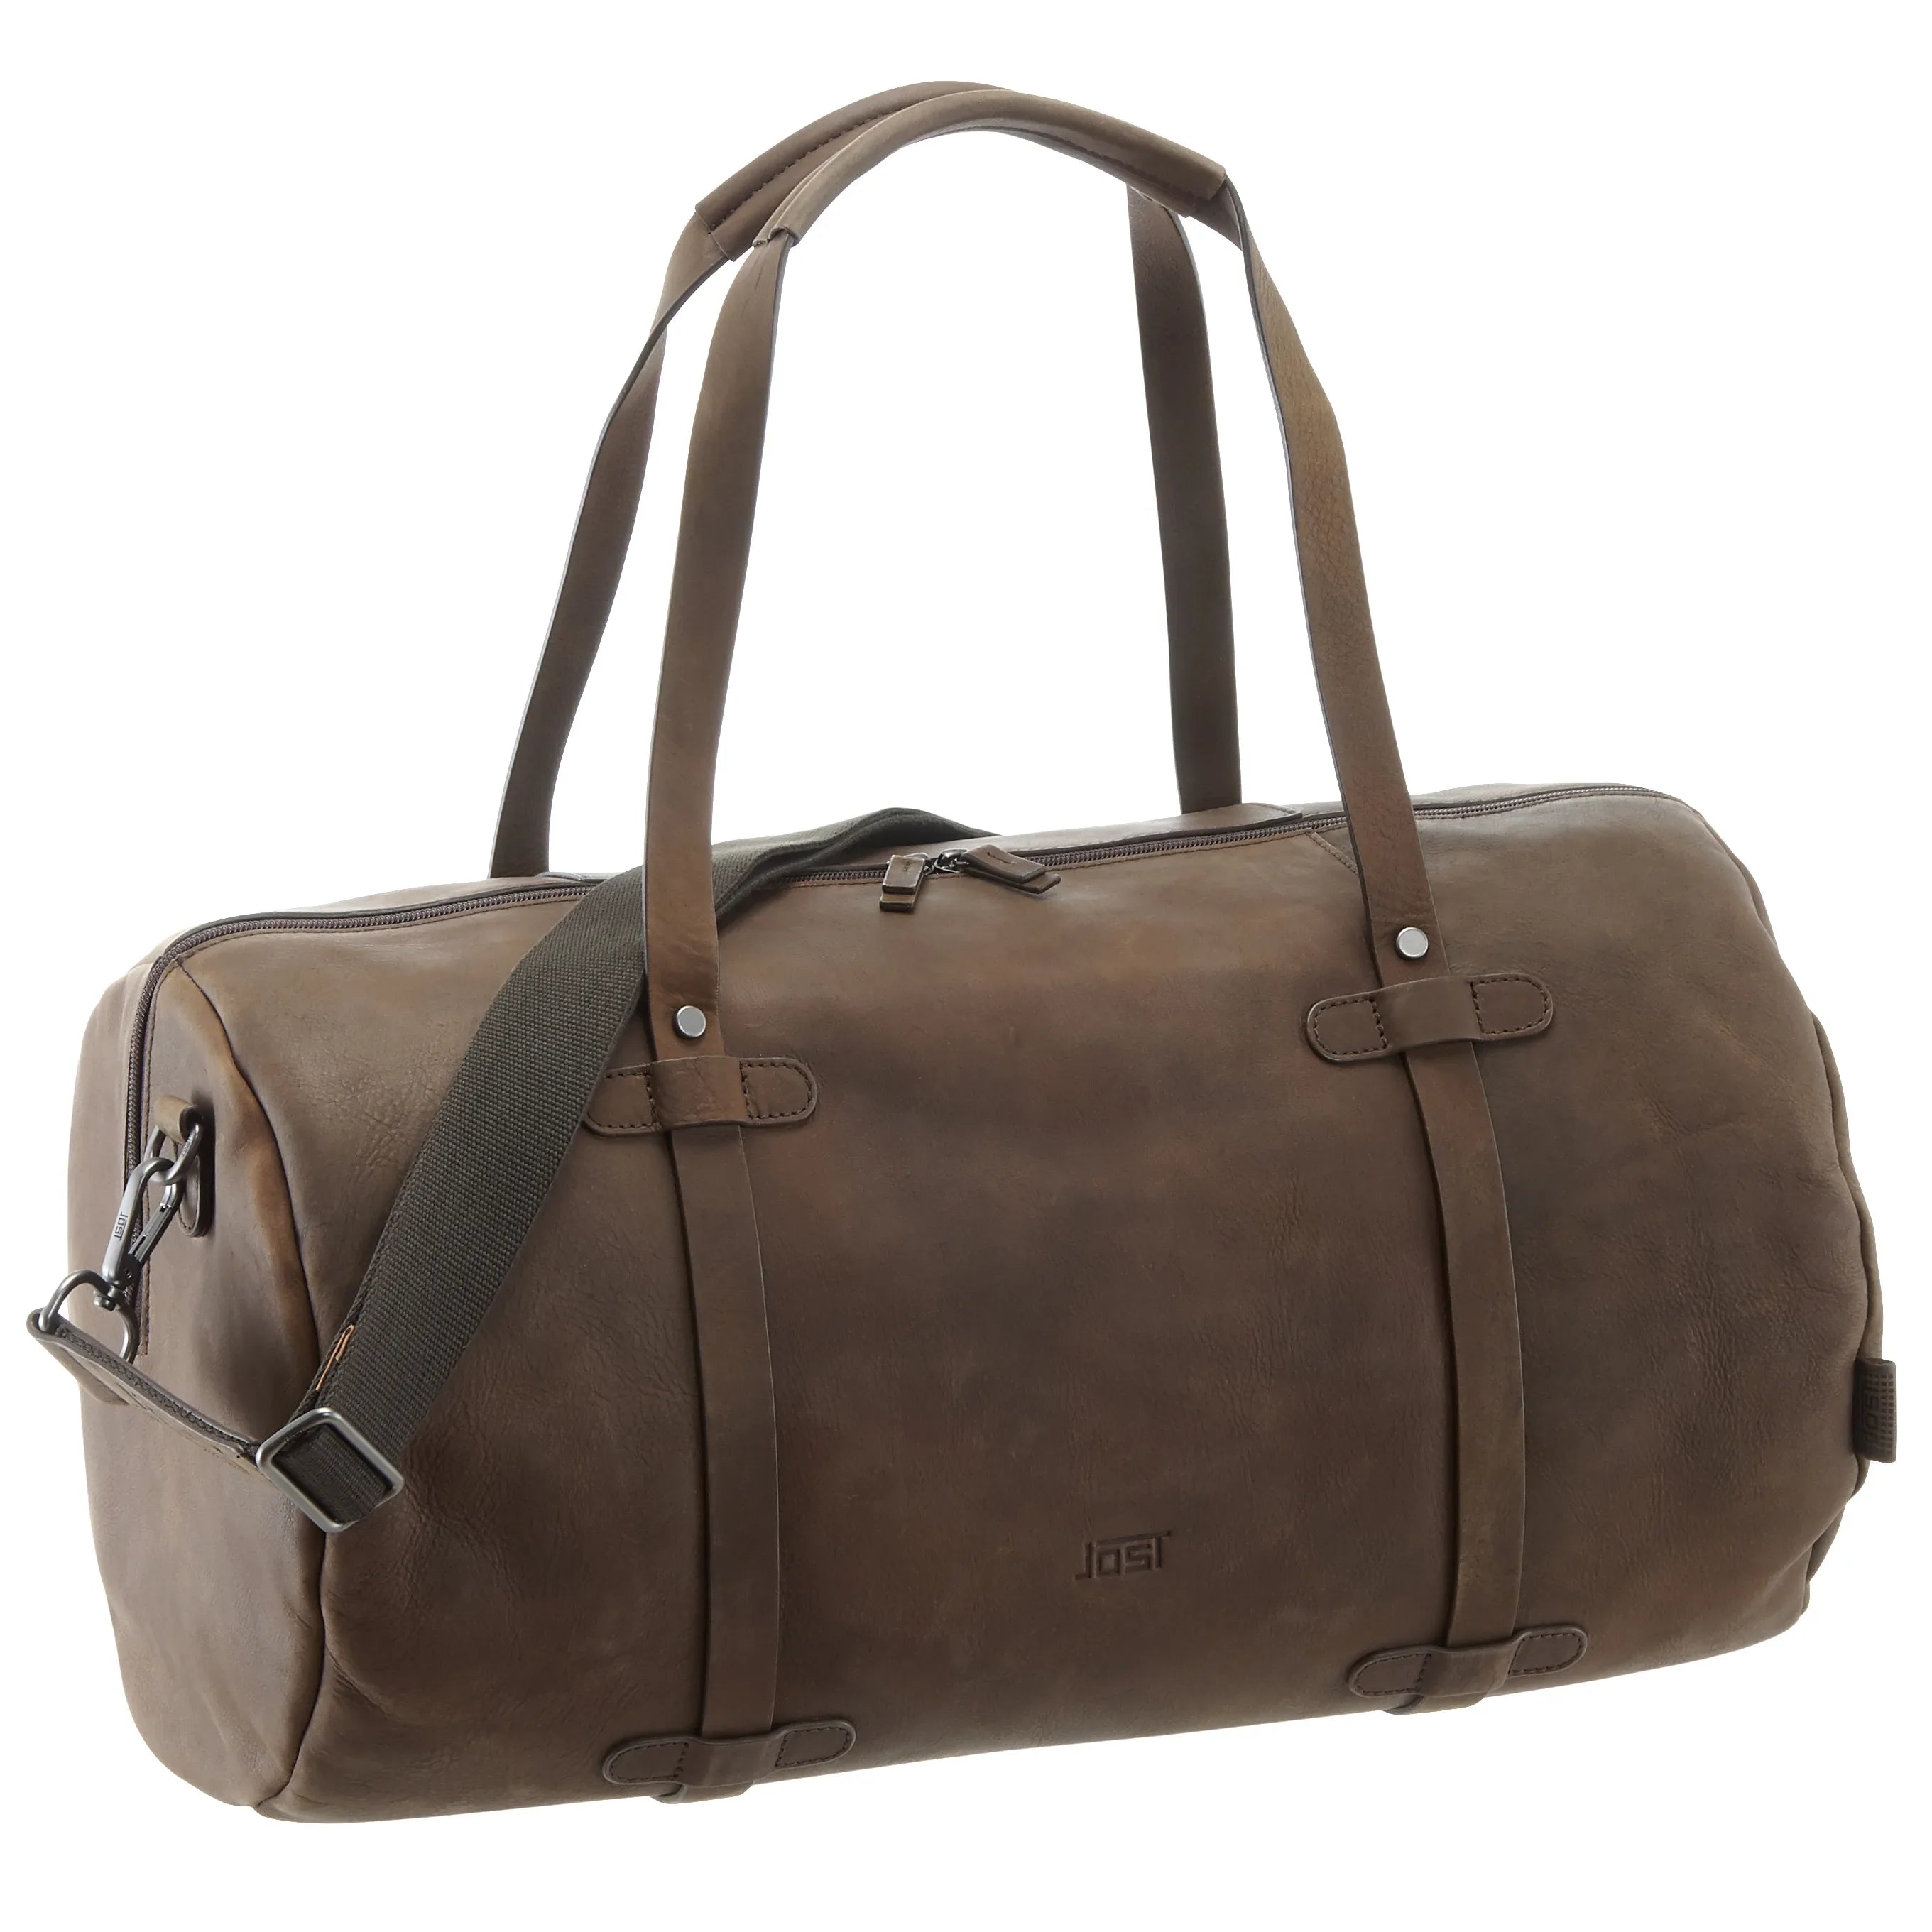 Jost Salo travel bag 50 cm - brown